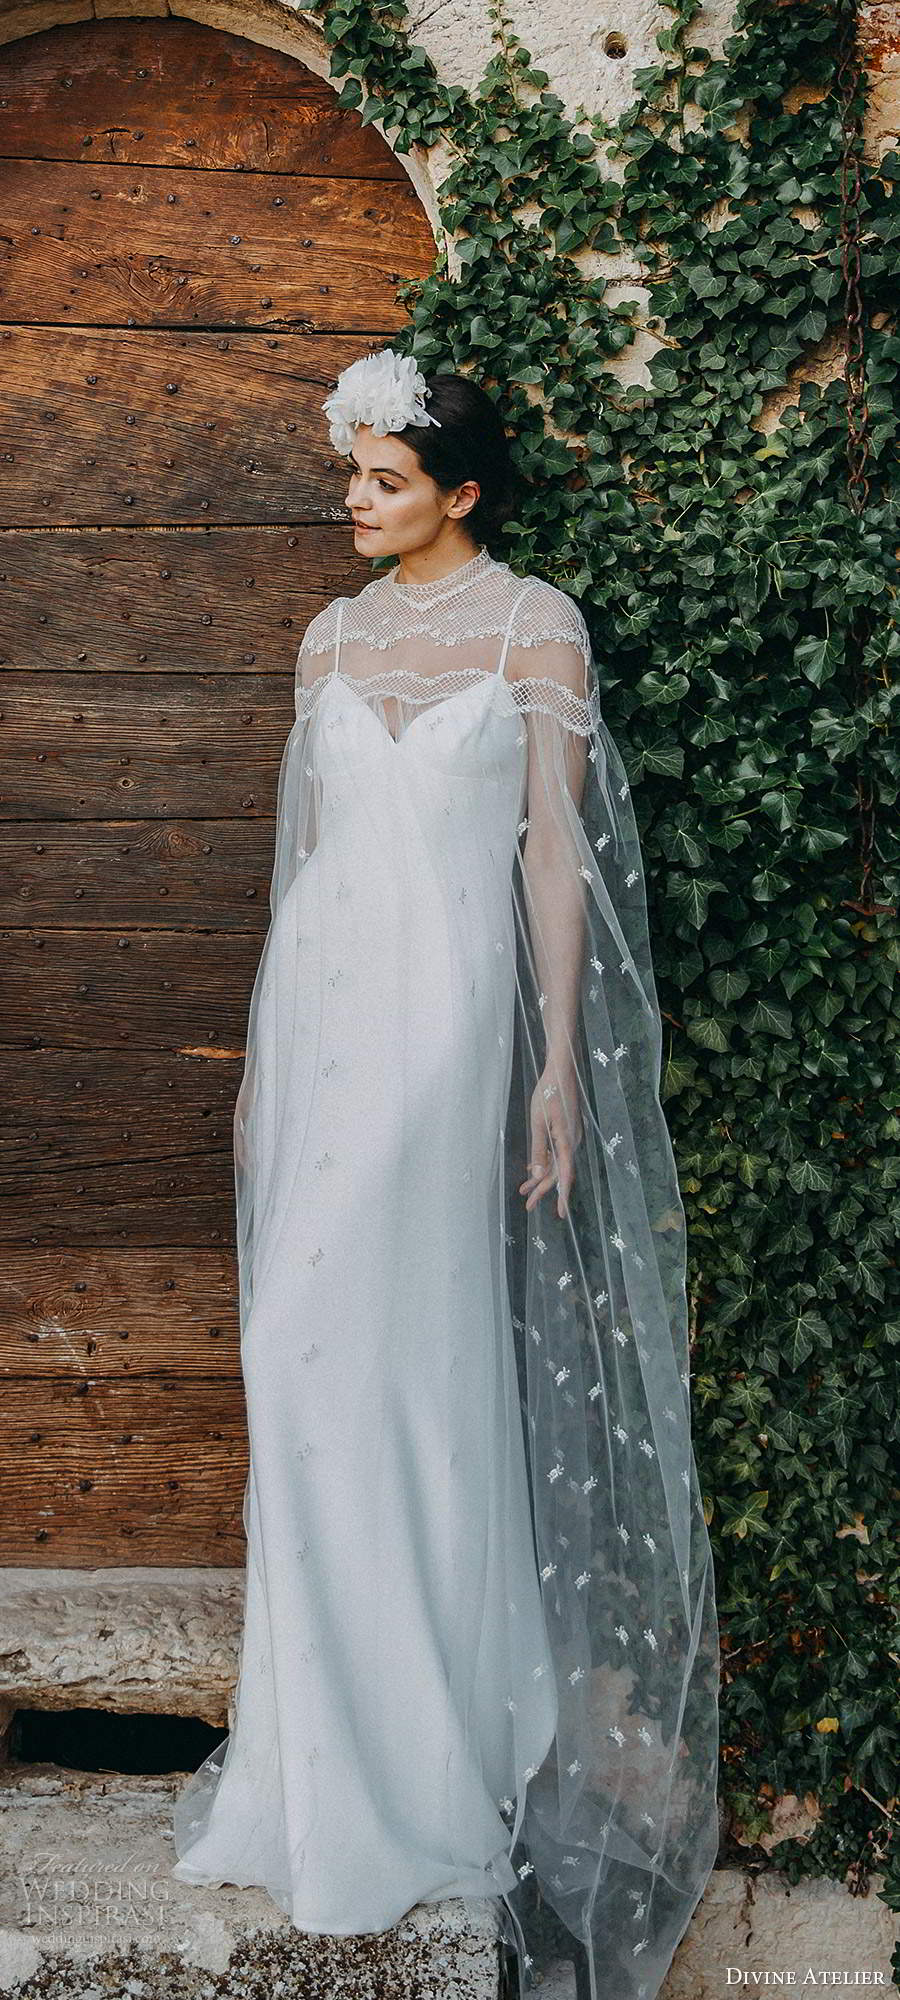 divine atelier 2020 bridal sleeveless thin straps sweetheart neckline sheath wedding dress low back chapel train sheer cape (10) mv